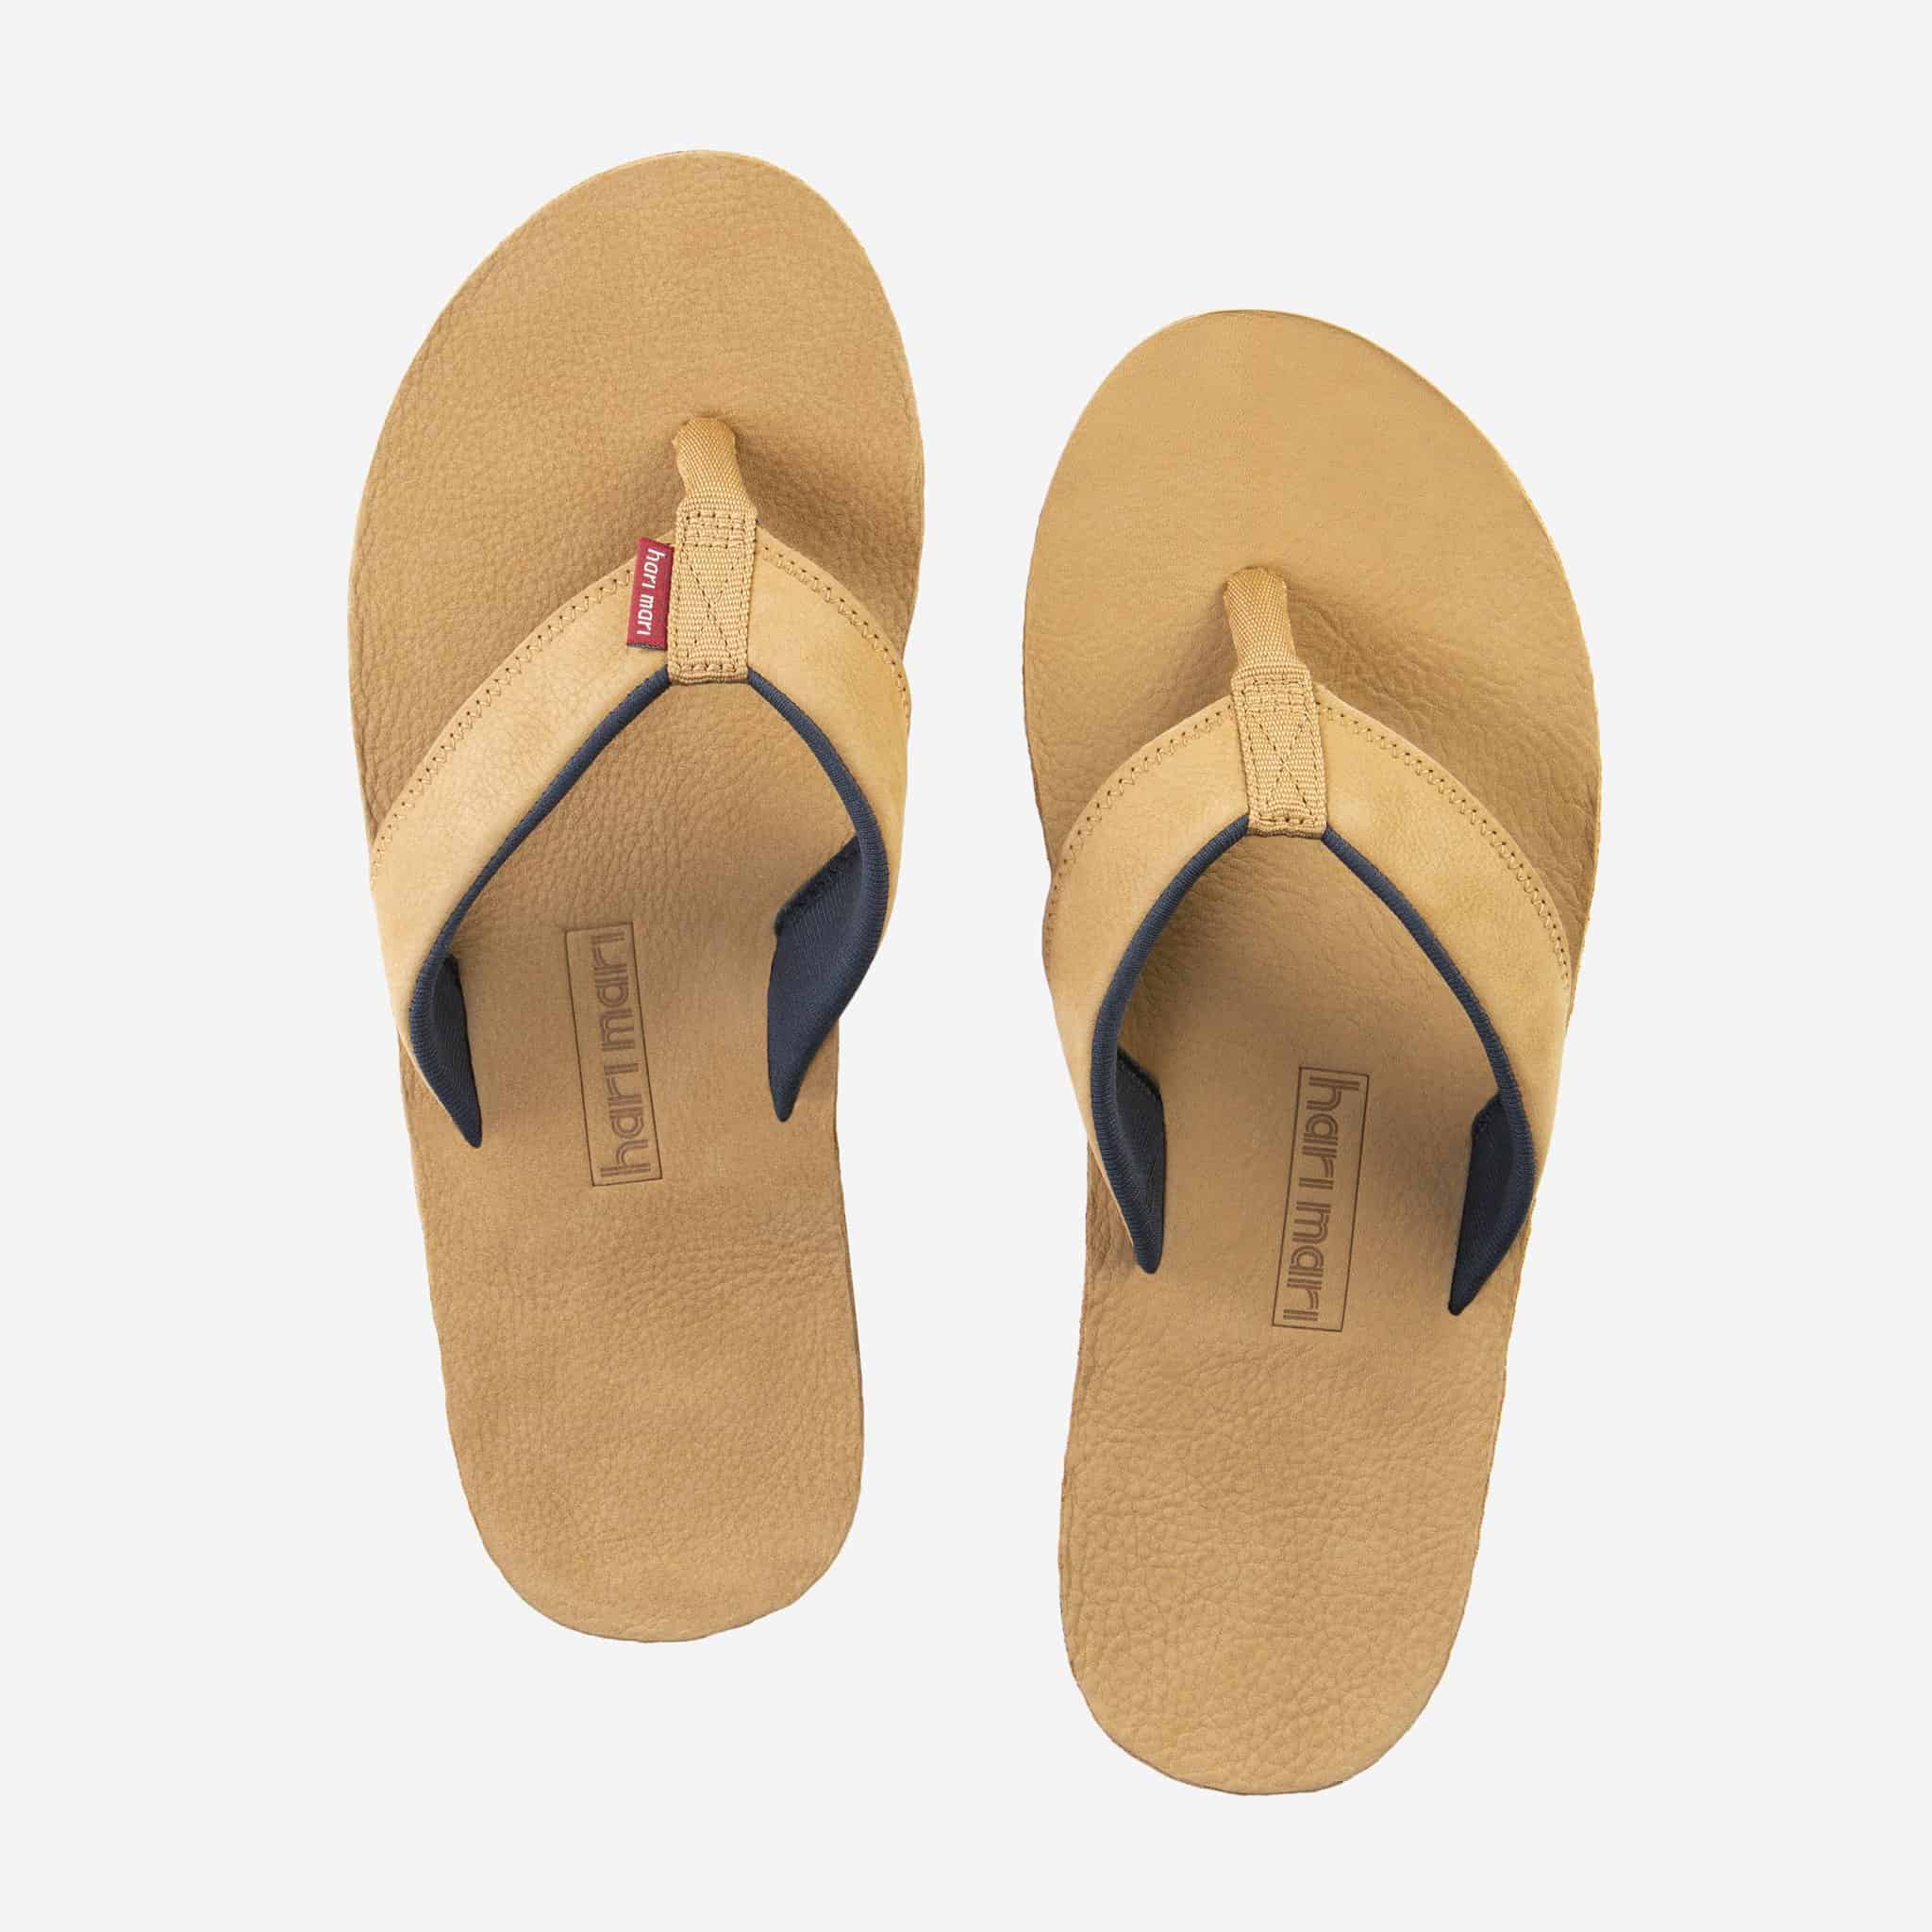 Featured image for “Hari Mari Review: Are the premium sandals worth the price?”